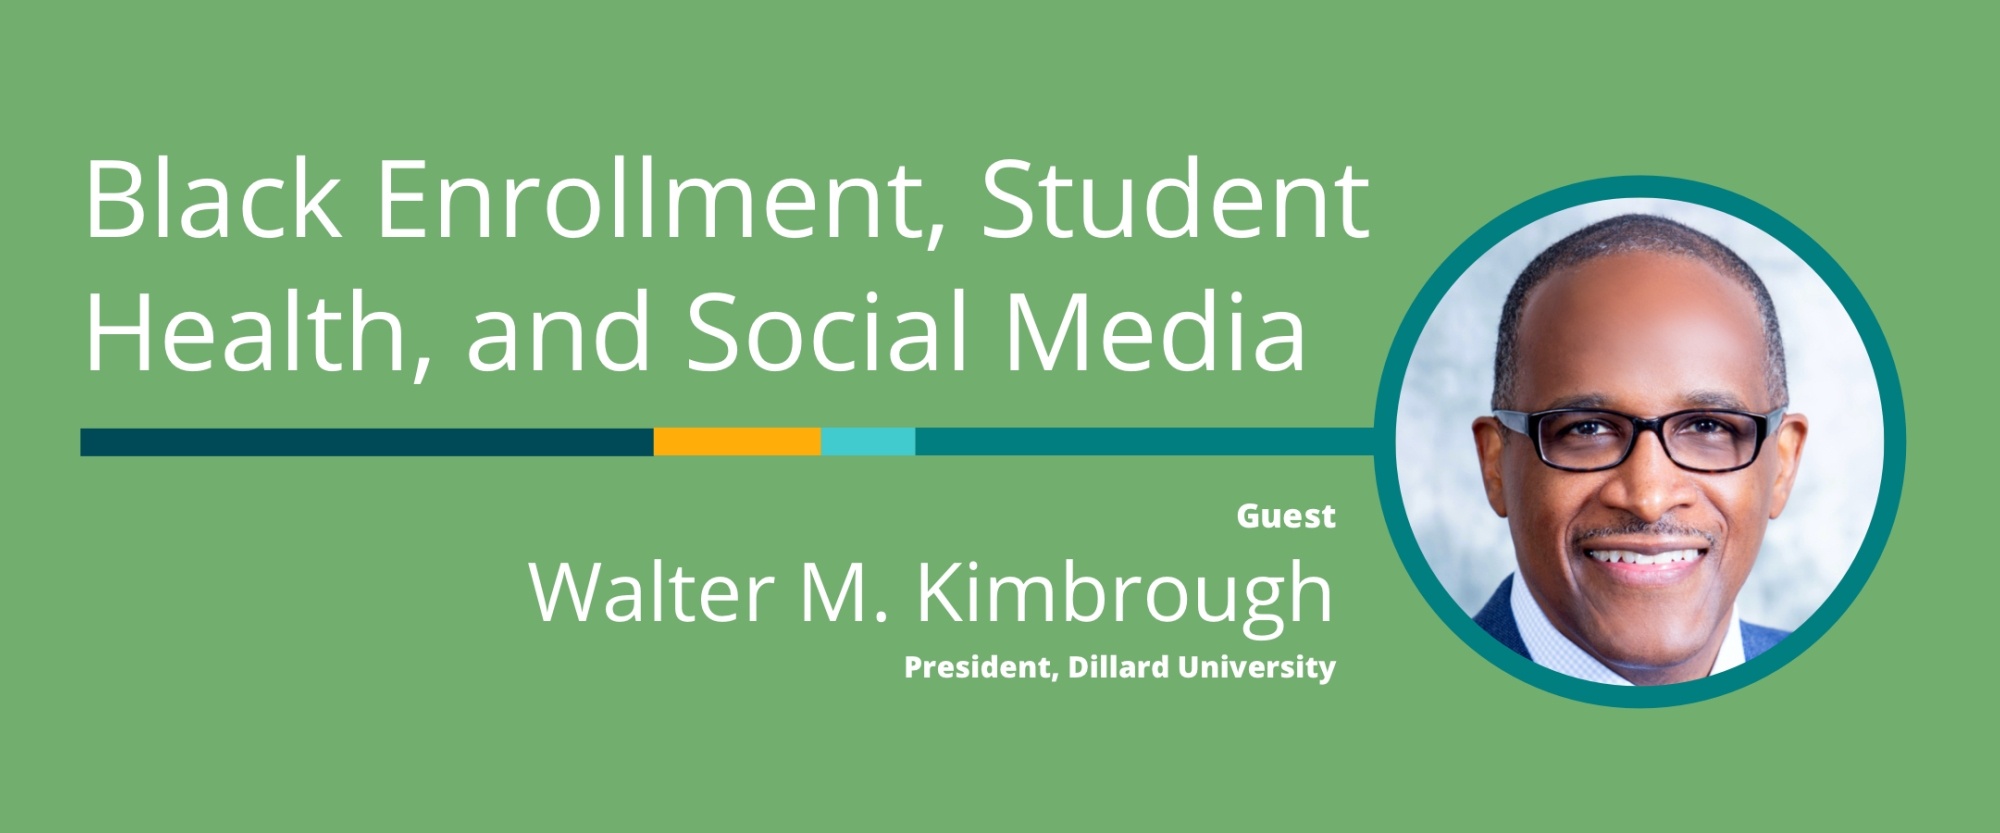 Black Enrollment, Student Health, and Social Media 